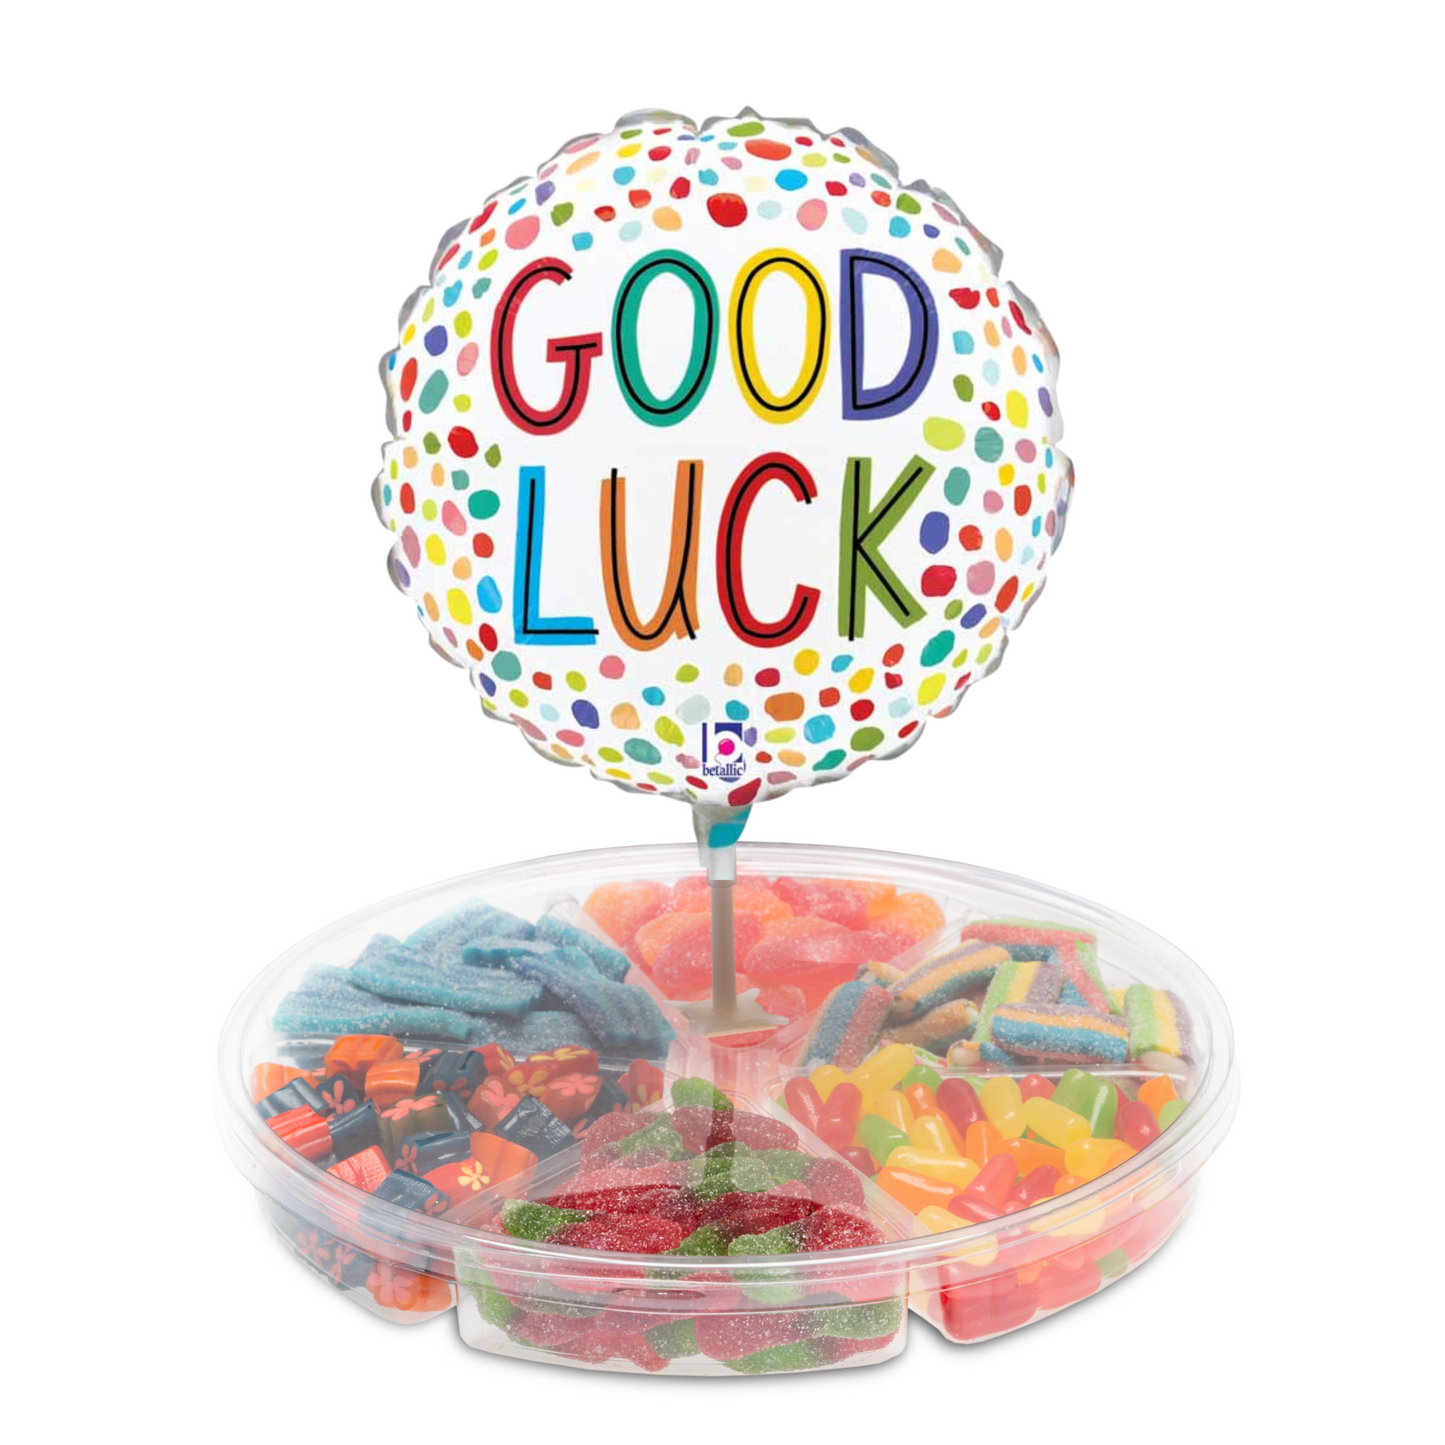 Medium Platter with Good Luck Balloon